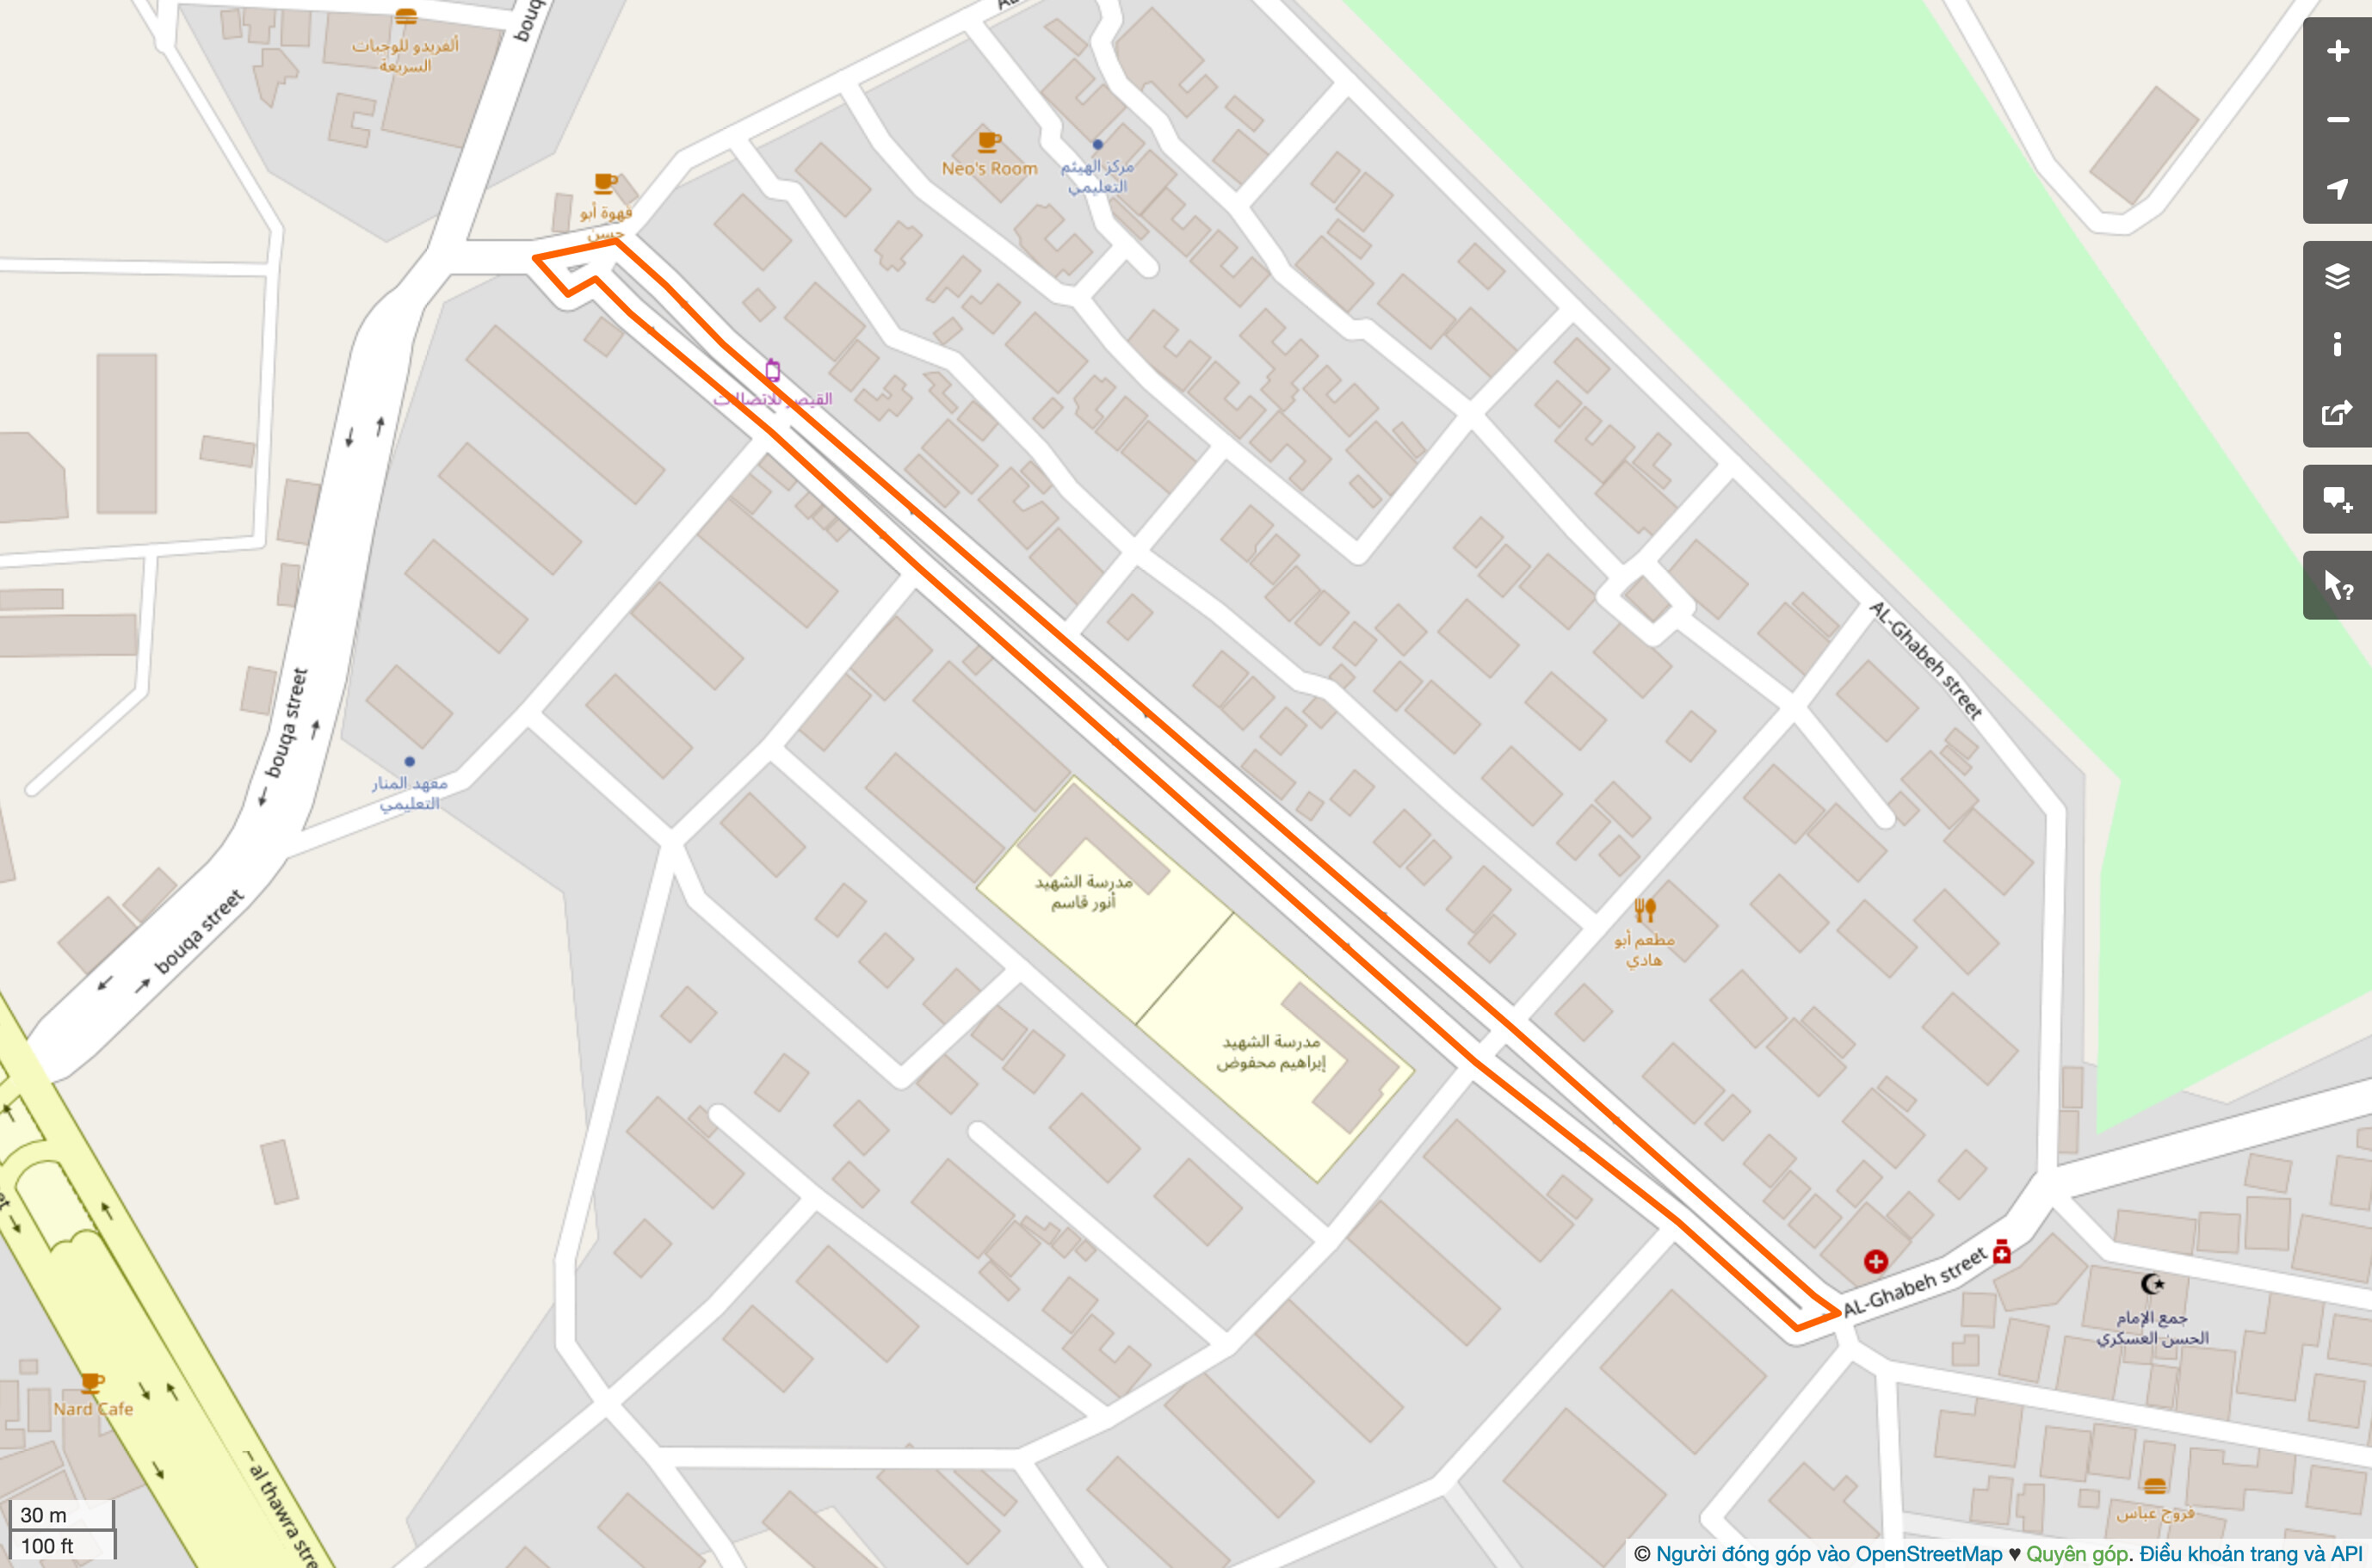 A linear street six blocks long, divided by a median.